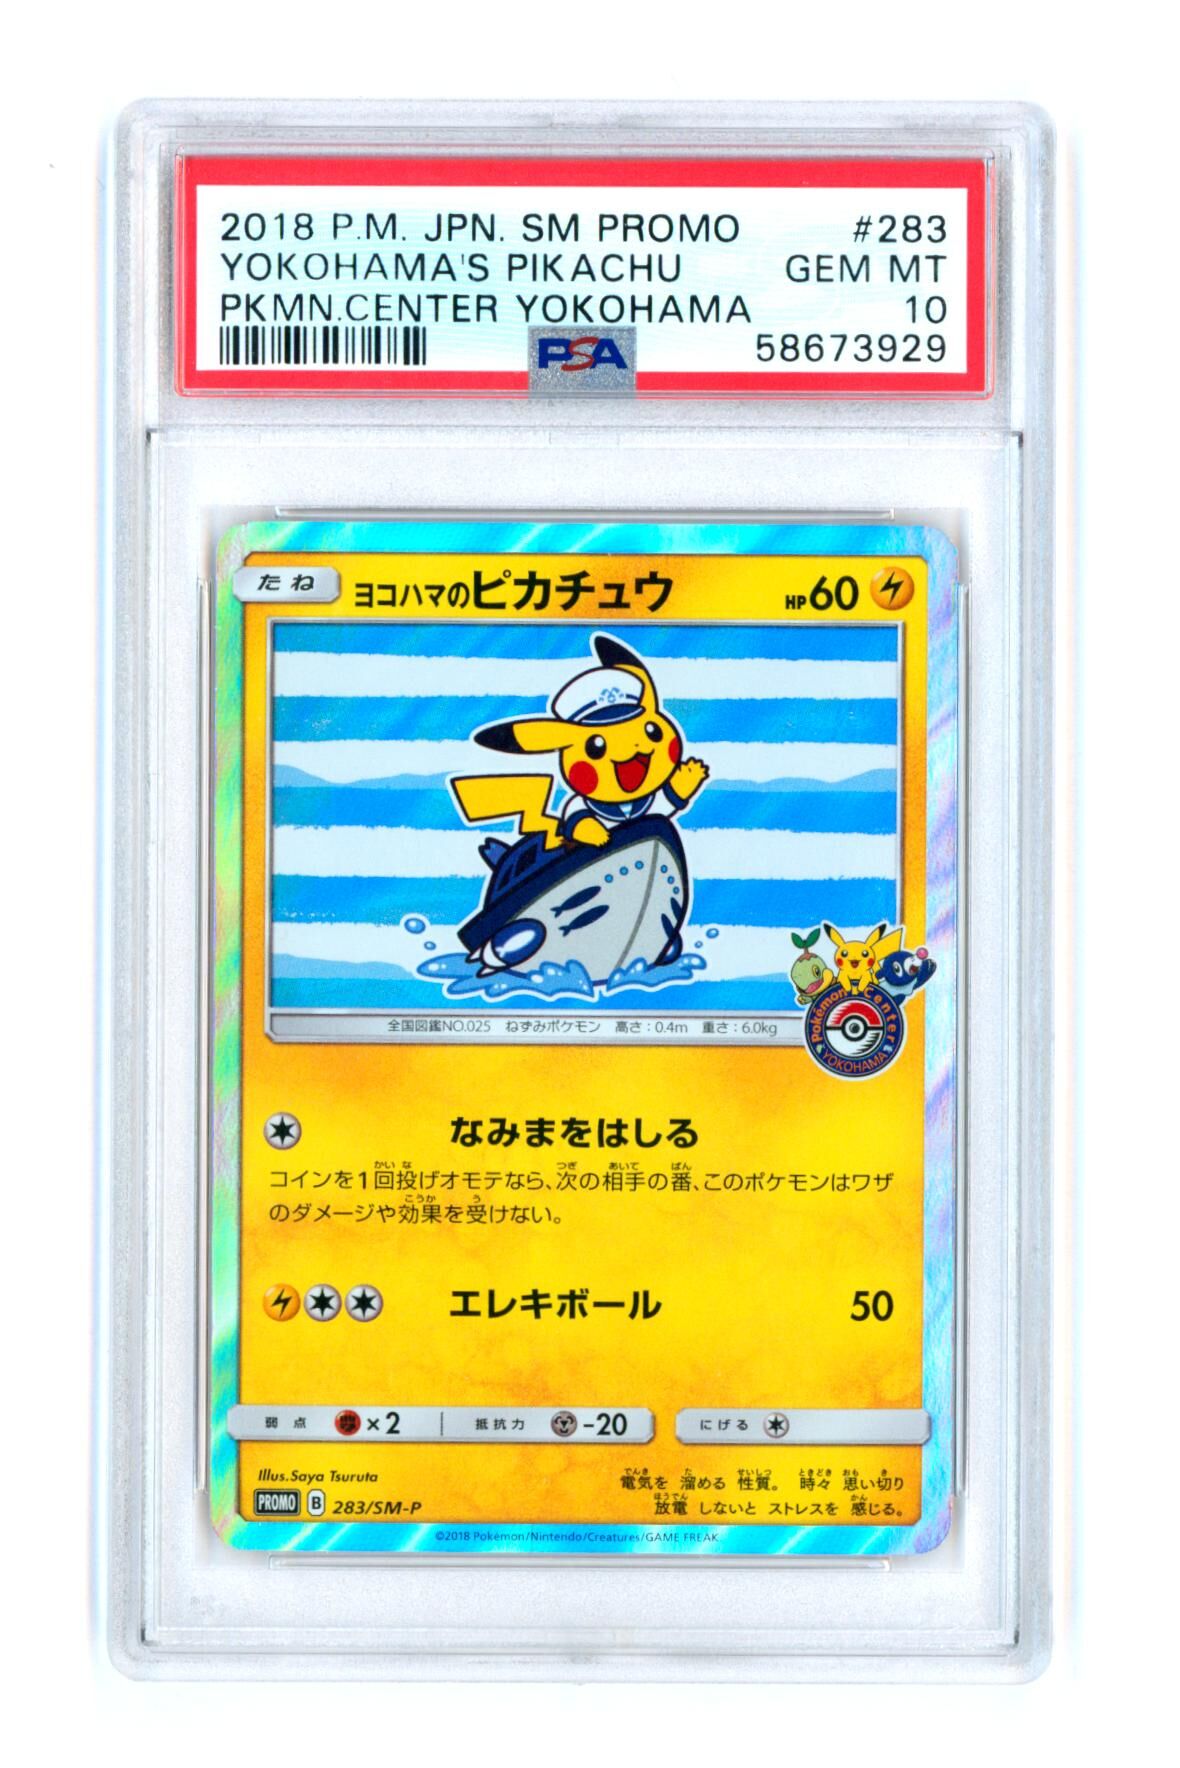 Yokohama's Pikachu 283/SM-P - Pokemon Center Yokohama Promo - PSA 10 GEM-MT - Pokémon